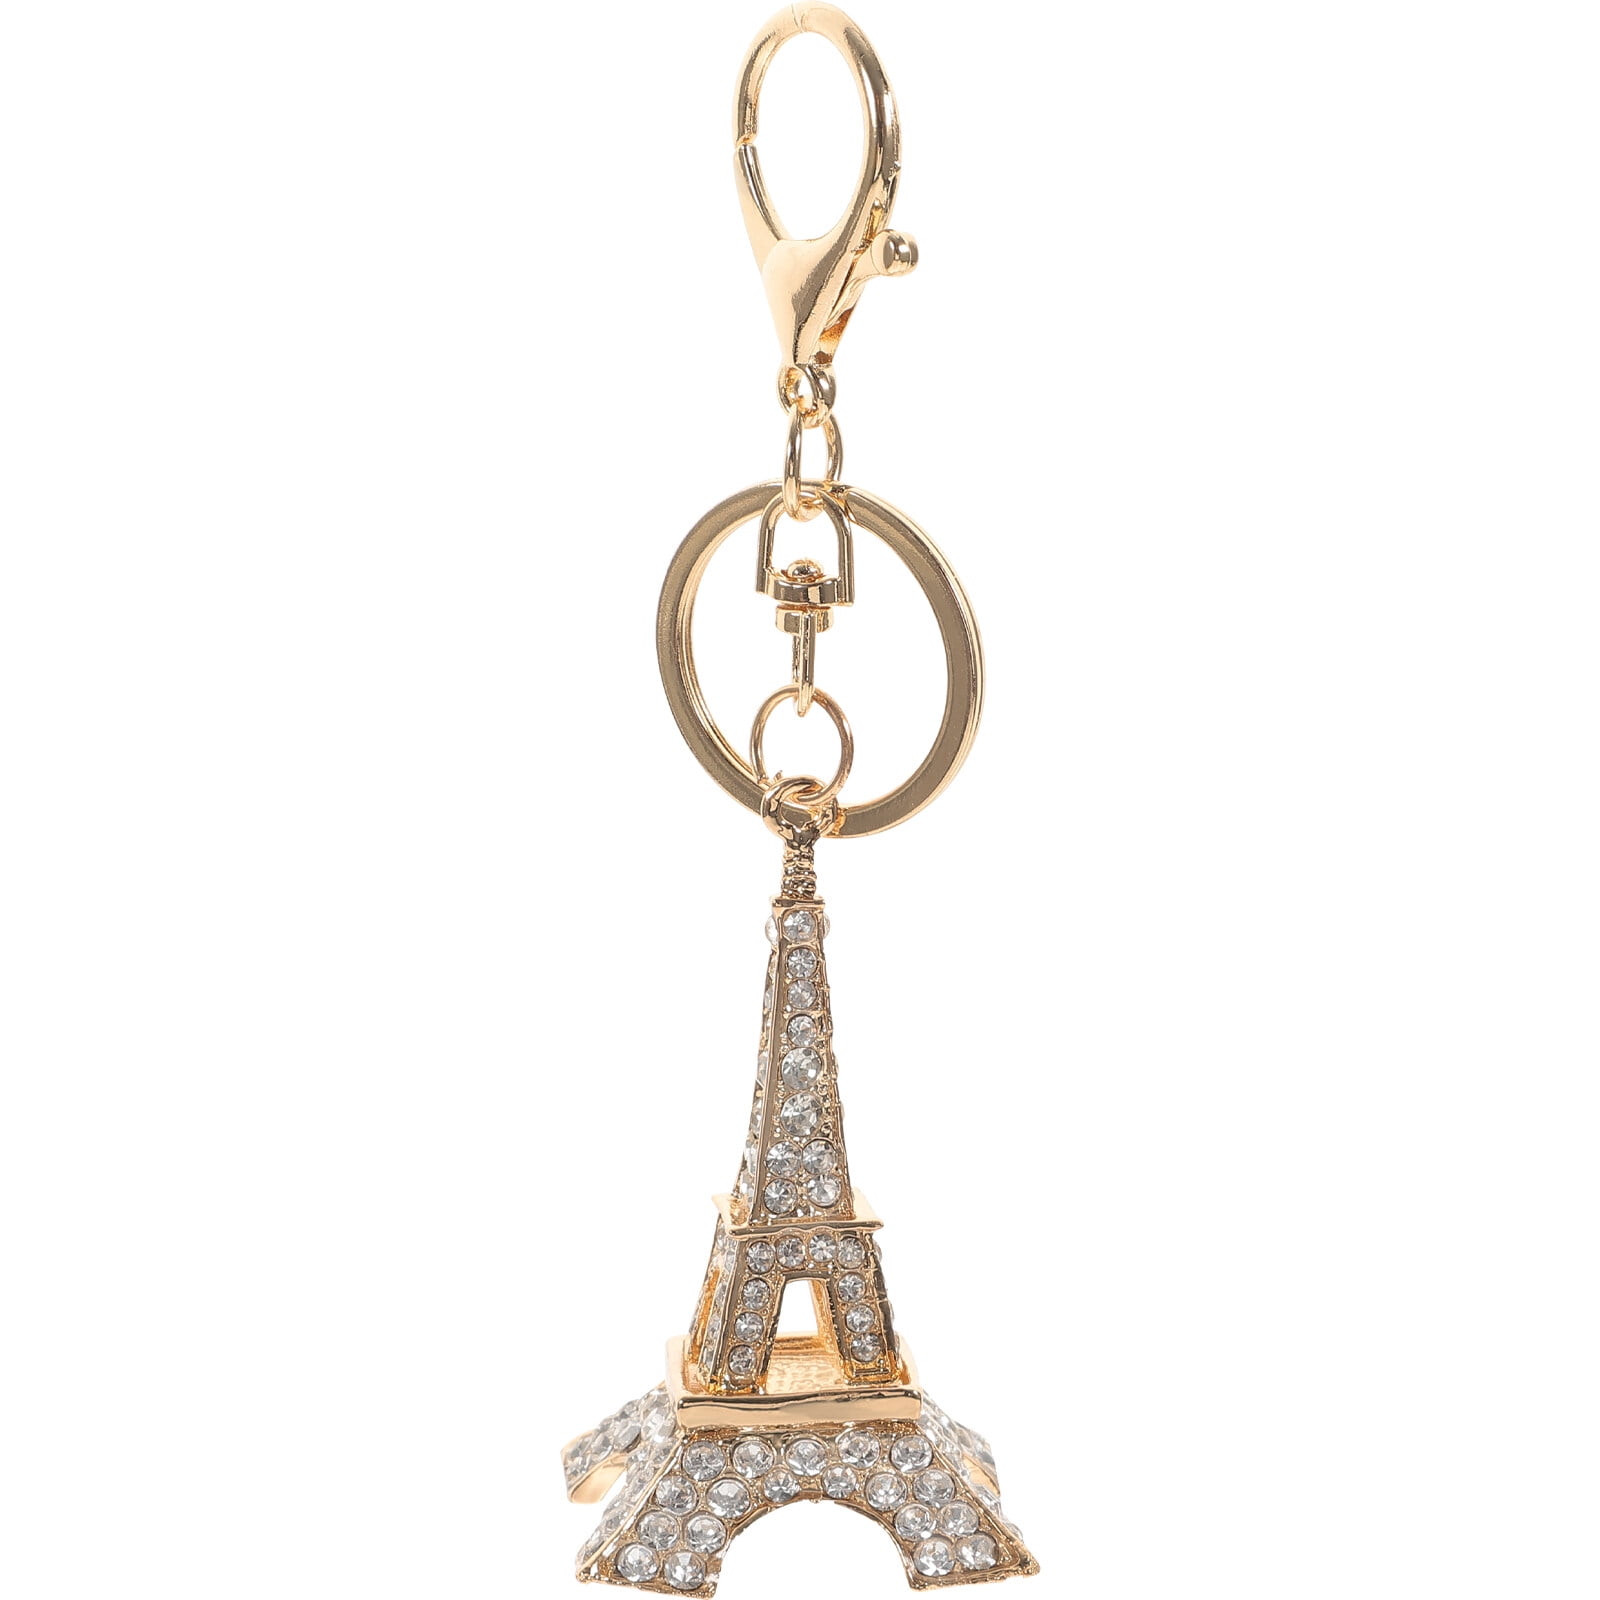  City-Souvenirs Gold Eiffel Tower Key Chain Favors : Home &  Kitchen